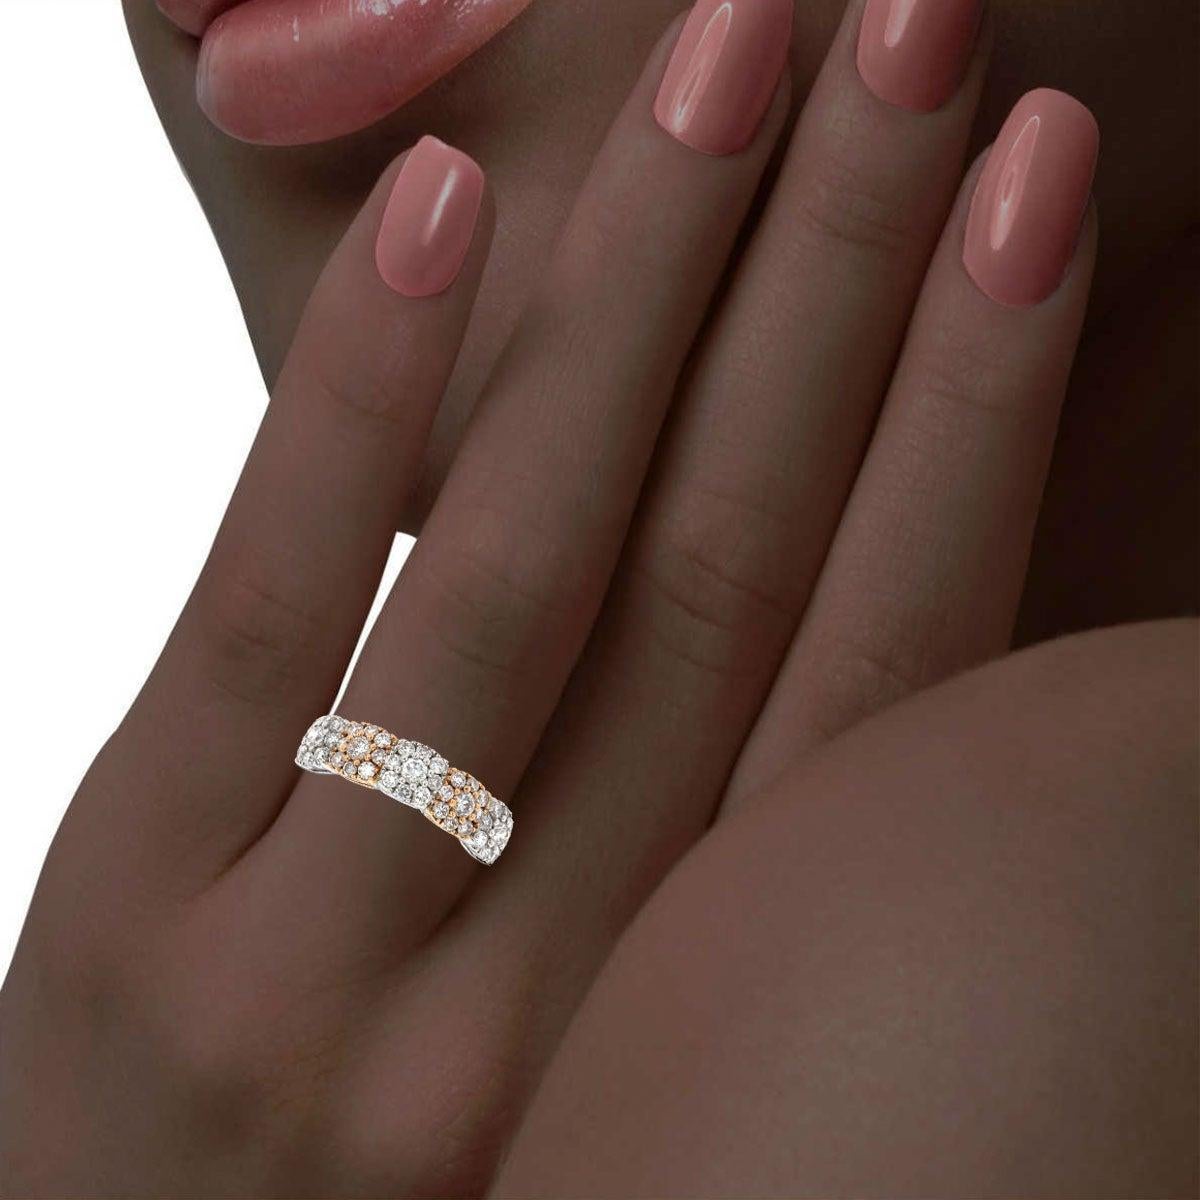 For Sale:  18 Karat White Gold Two-Tone Halo Fashion Ring '1 Carat' 4